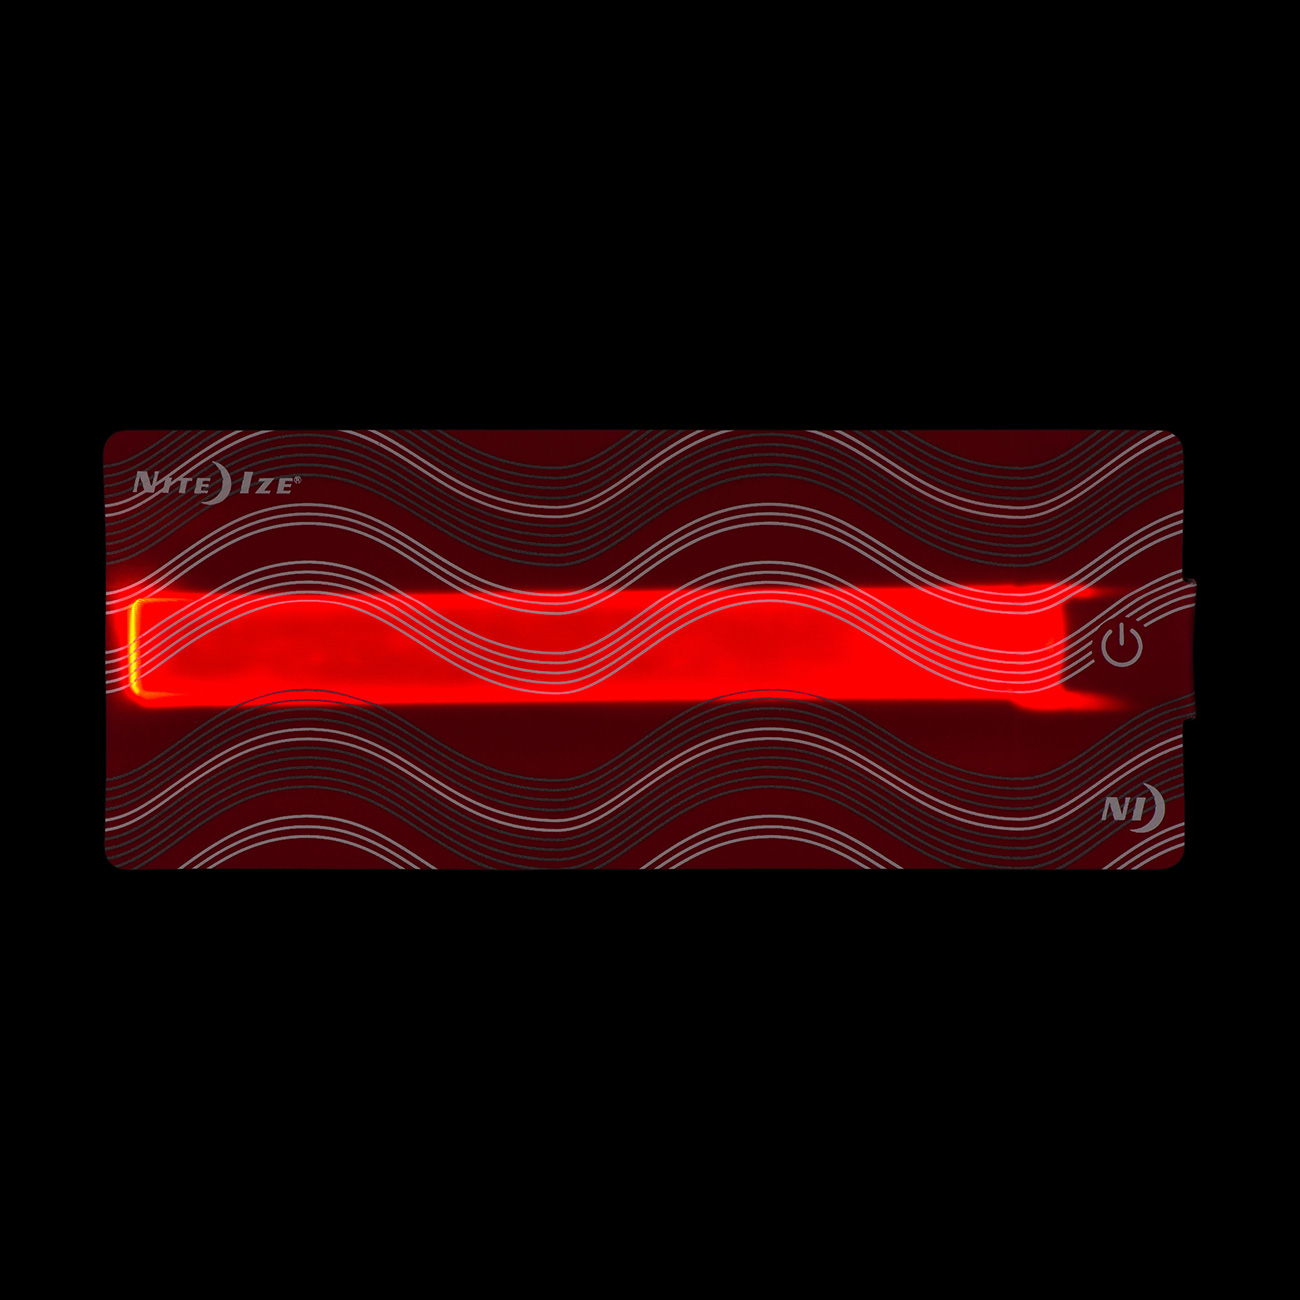 Nite Ize Flaschen Wrap SlapLit rot mit LED-Beleuchtung Bild 1